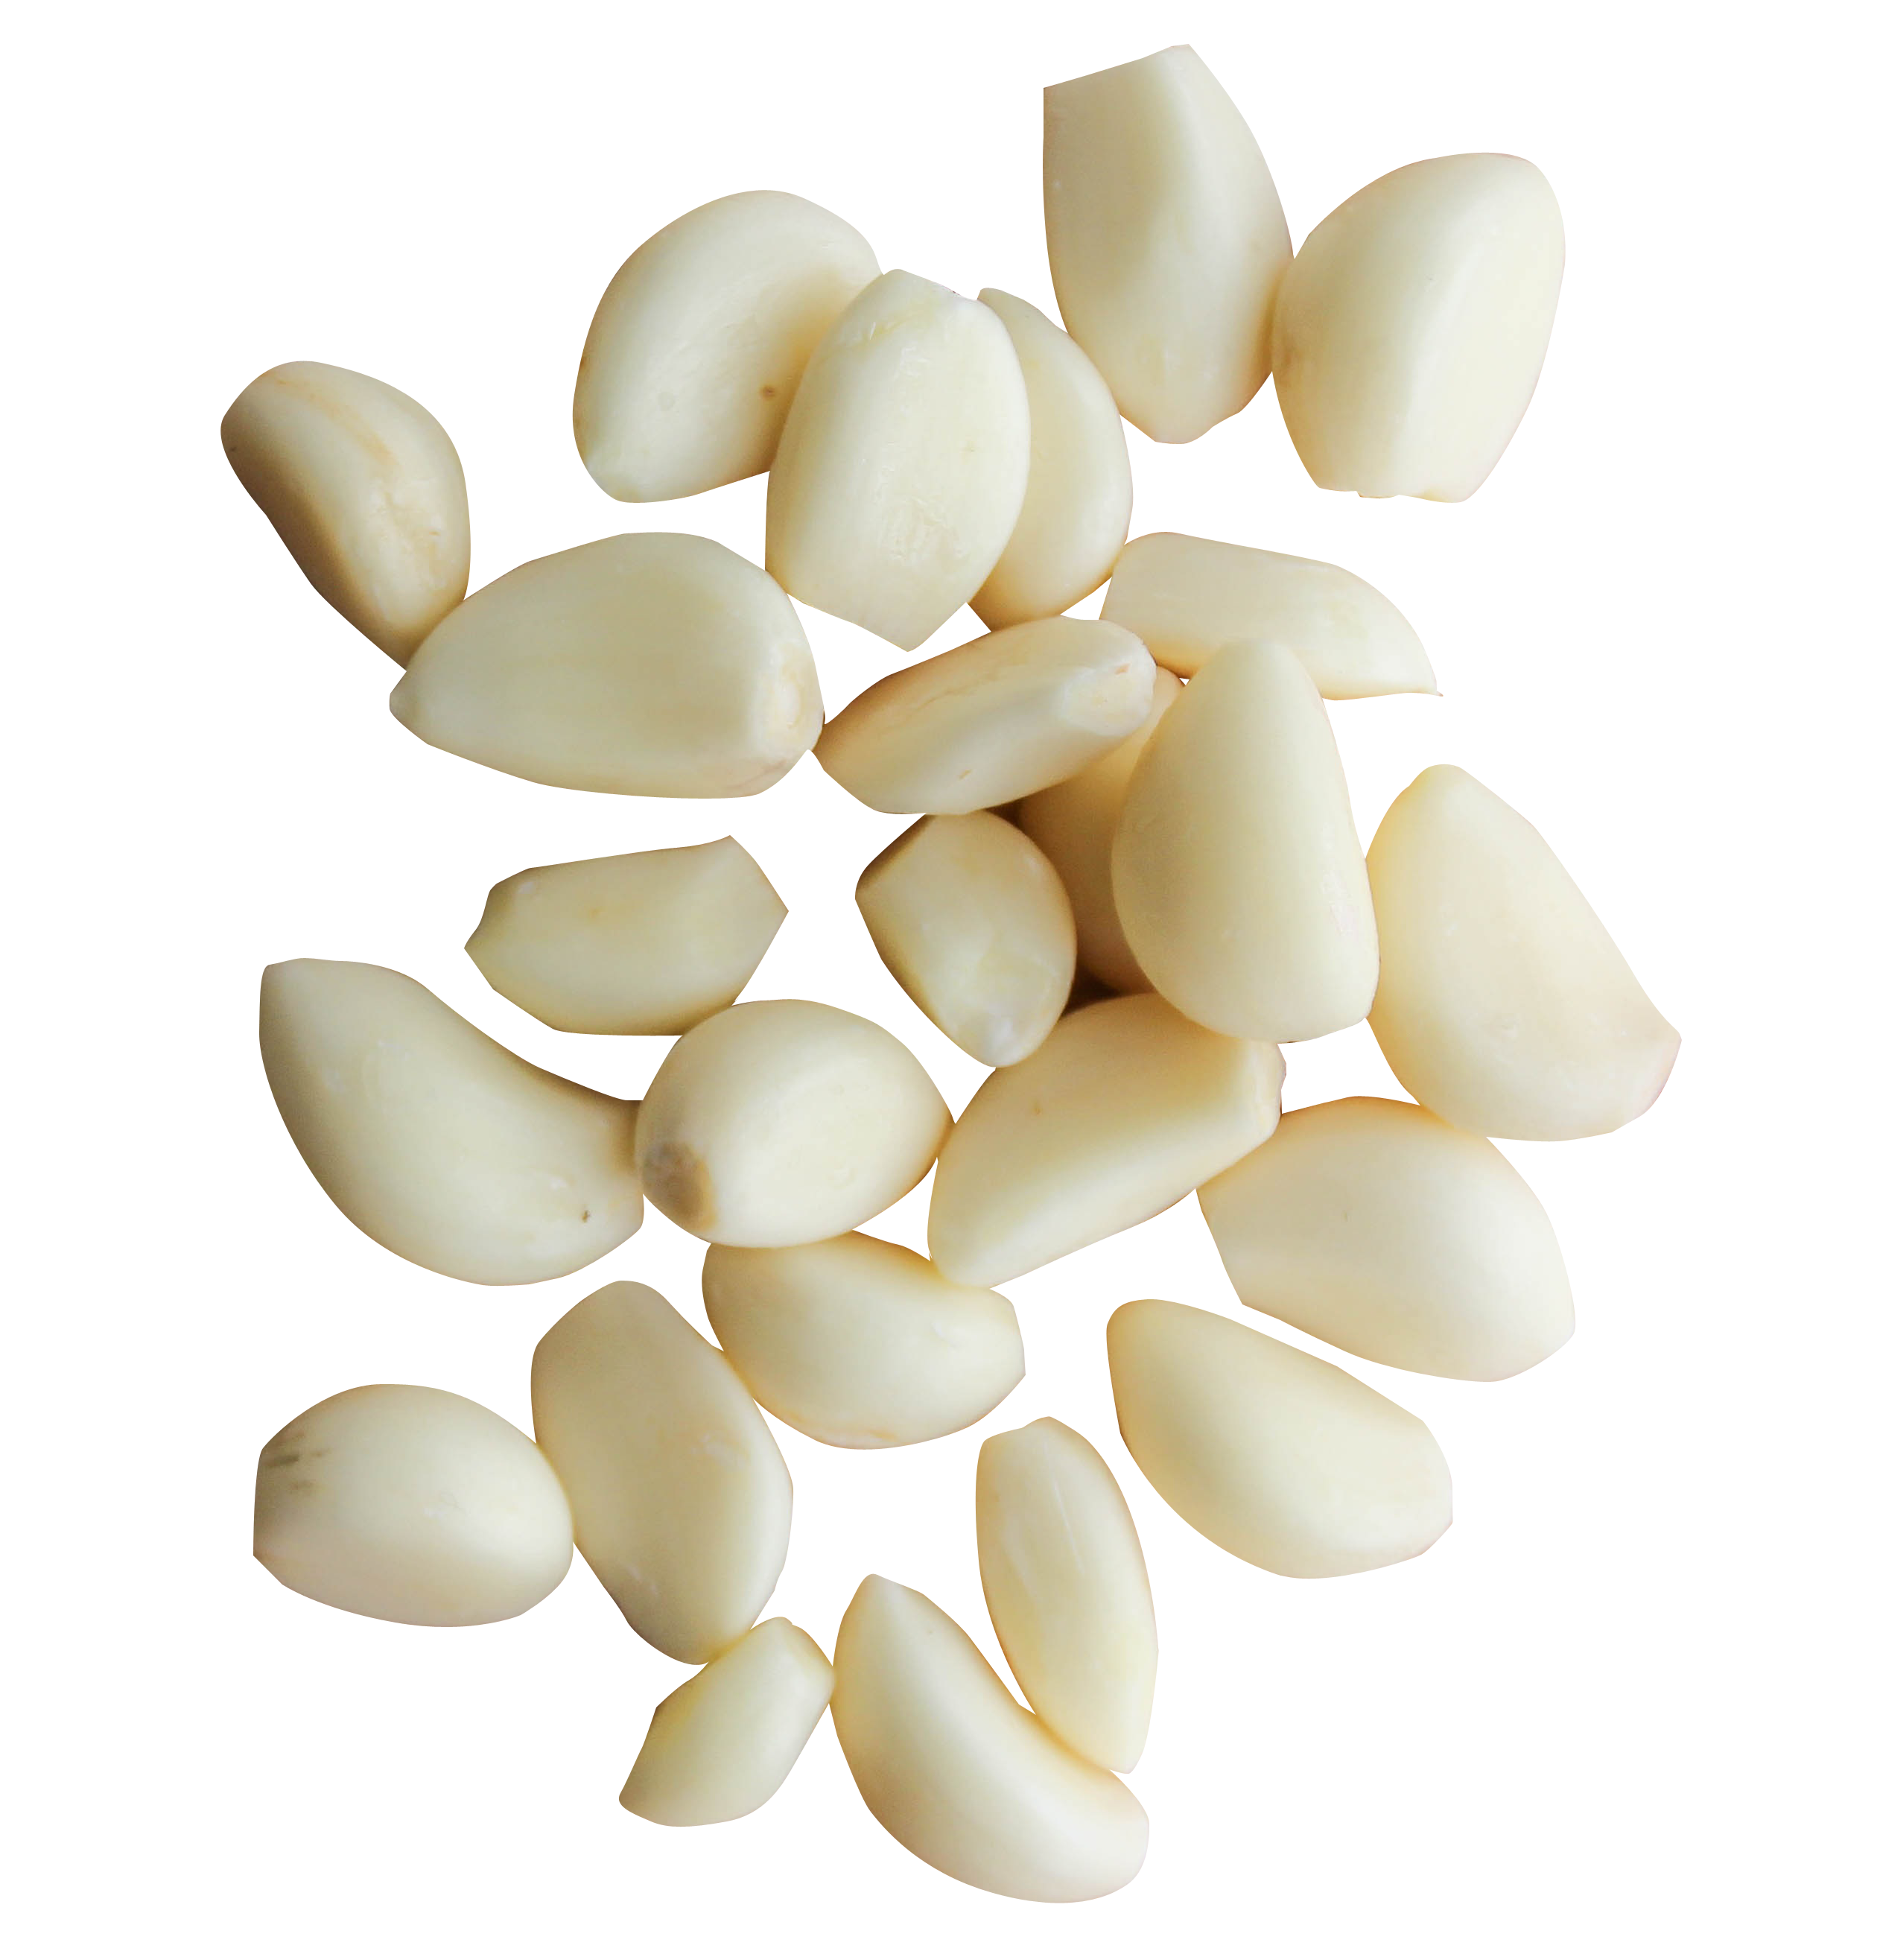 peeled garlic cloves png image pngpix #25507